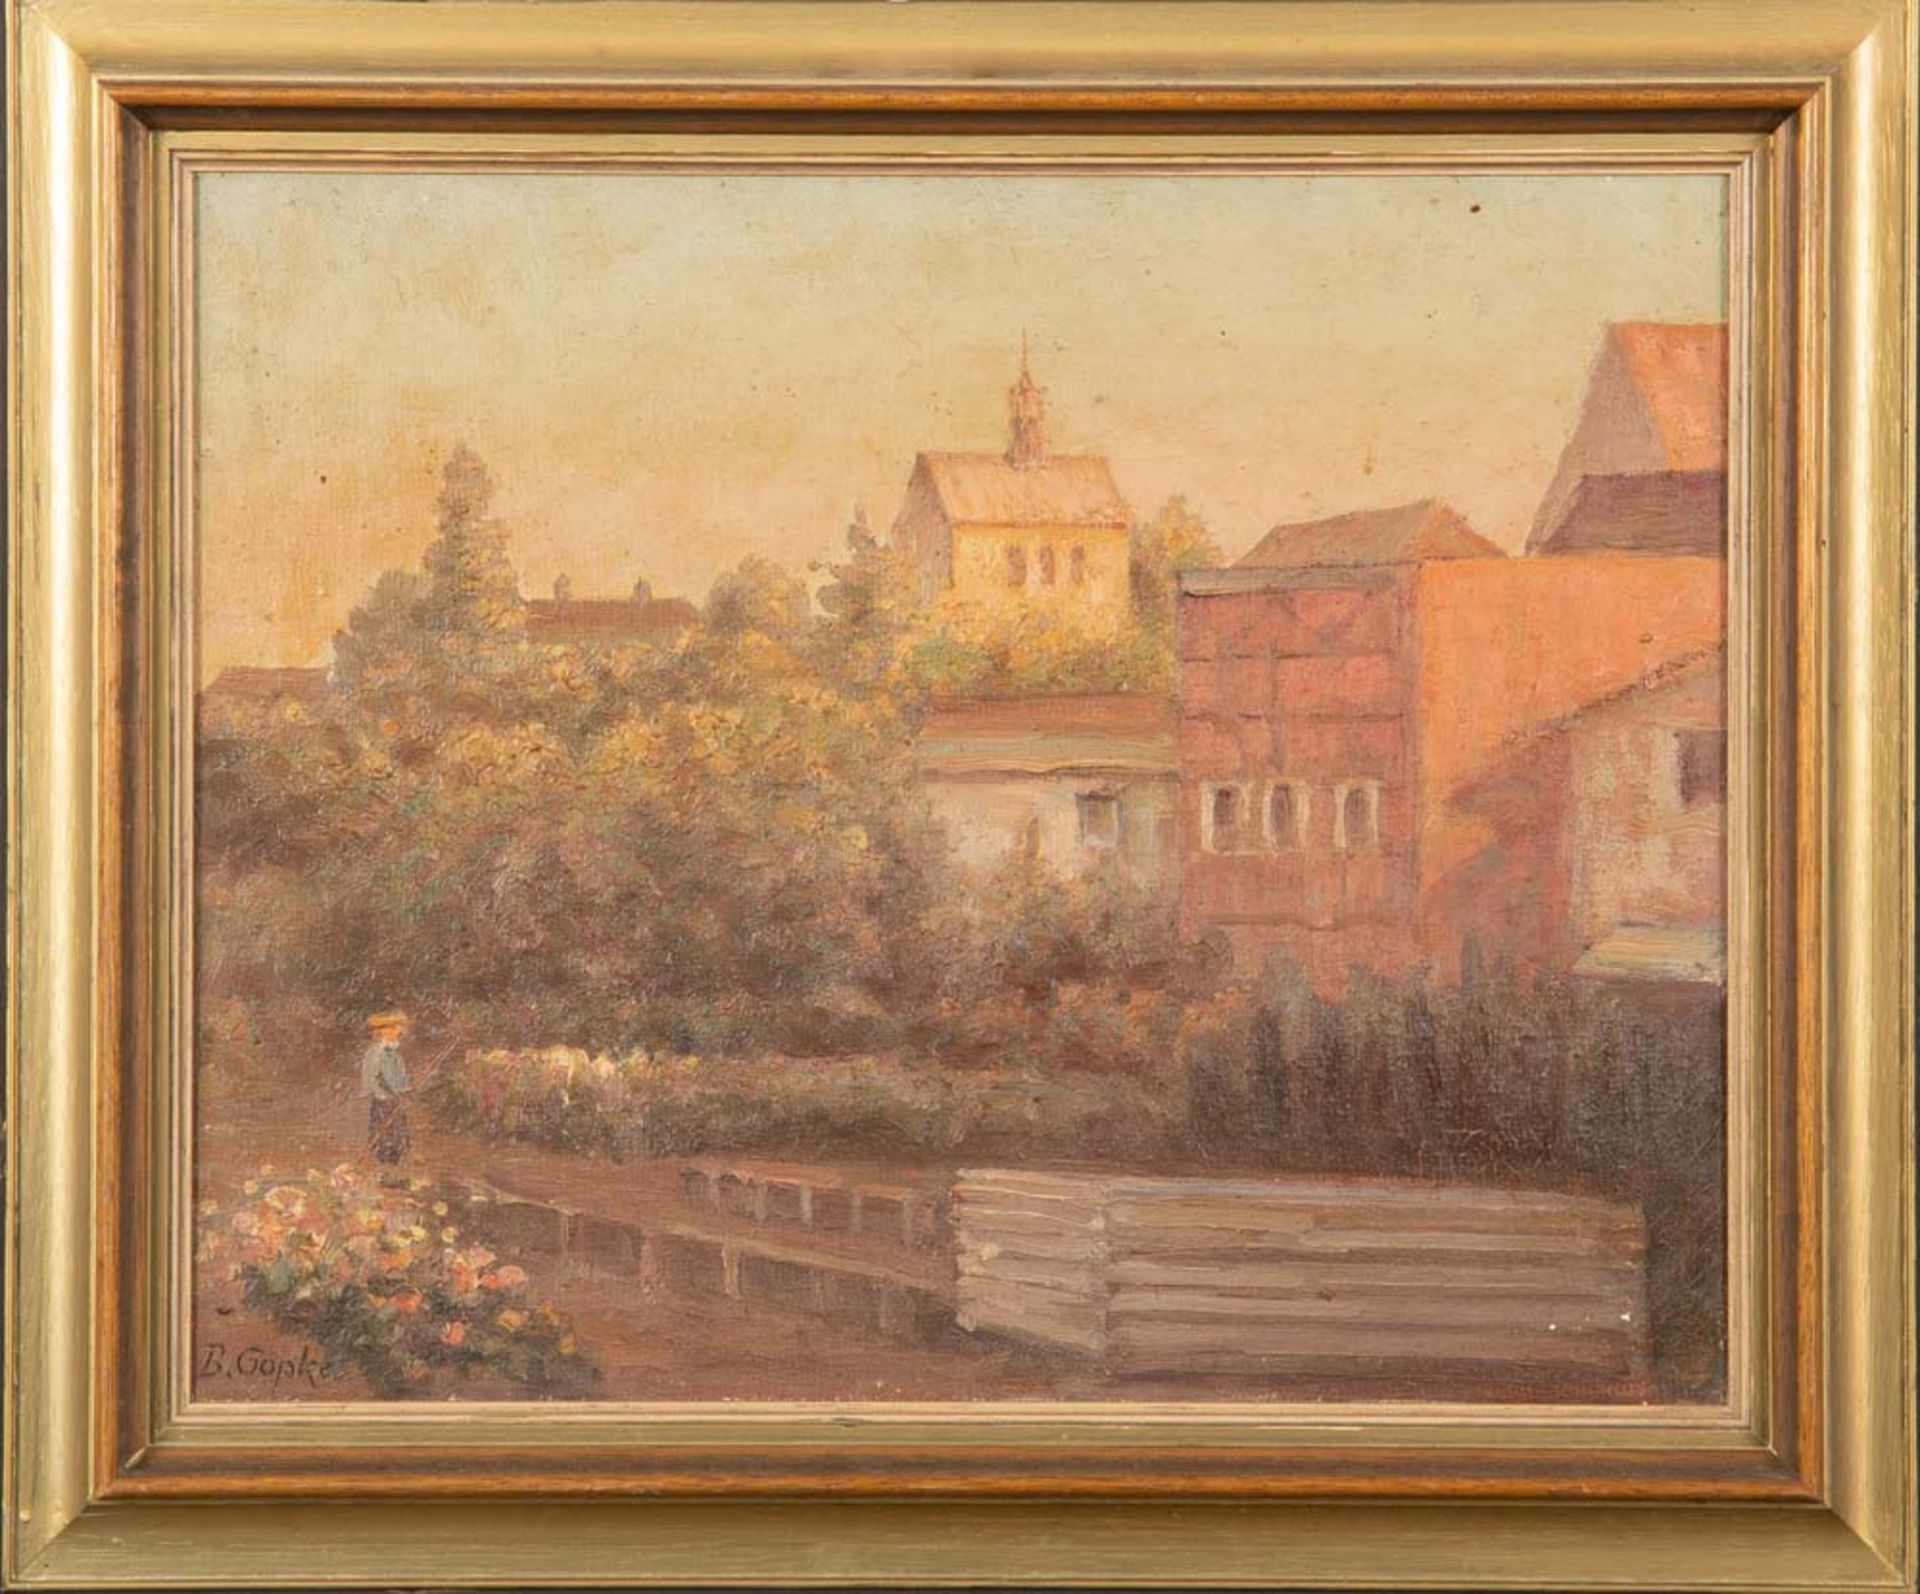 B. Göpke (Maler des 20. Jhs.). Ansicht von Wunstorf. Öl/Lw., li./u./sign., gerahmt, 40 x 50,5